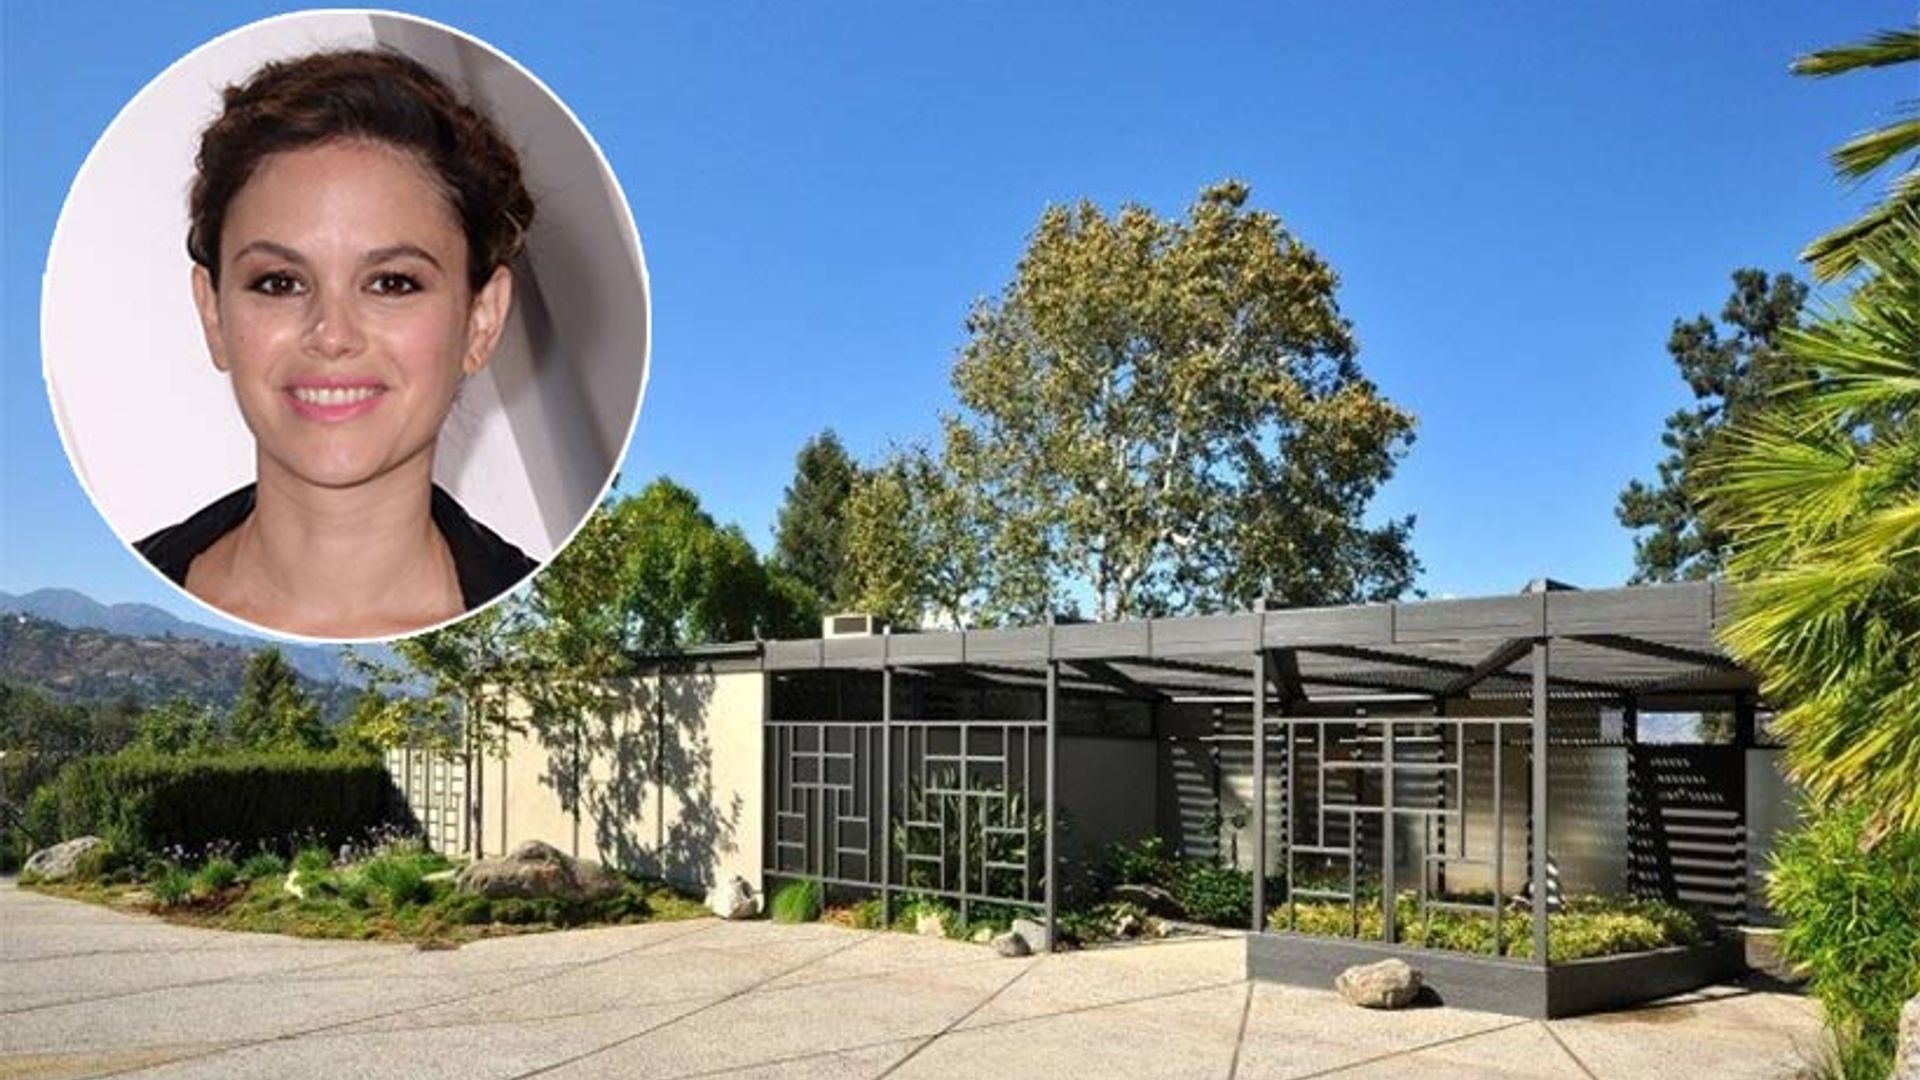 Rachel Bilson buys new home after split from Hayden Christensen